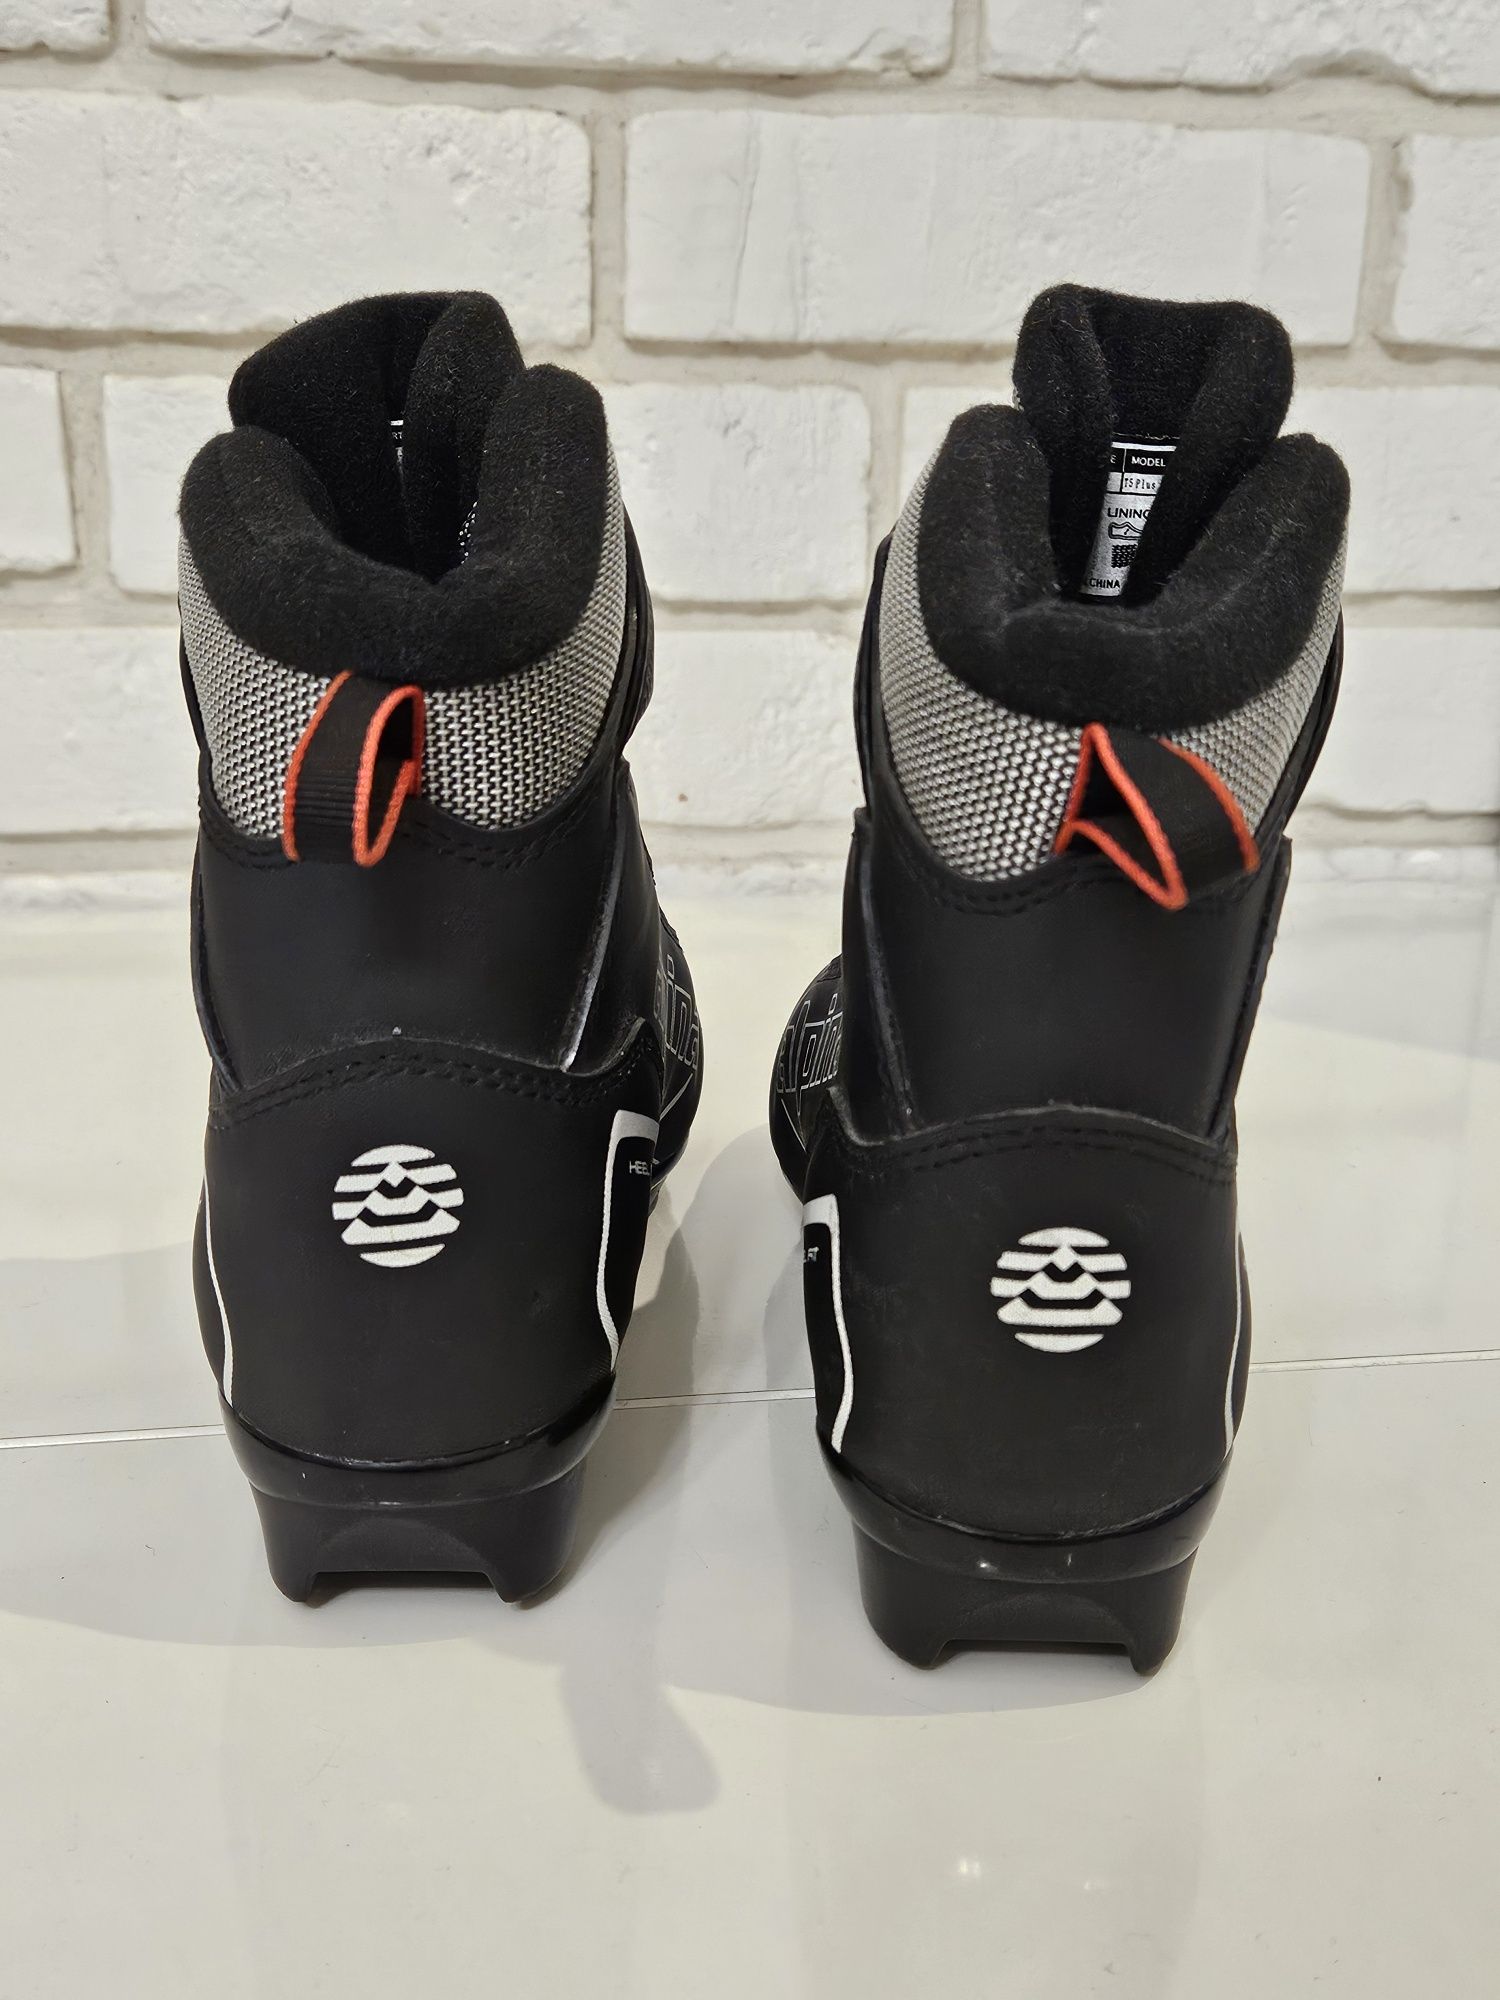 Buty narciarskie biegowe biegówki Alpina T5 plus Touring jr NNN r. 36